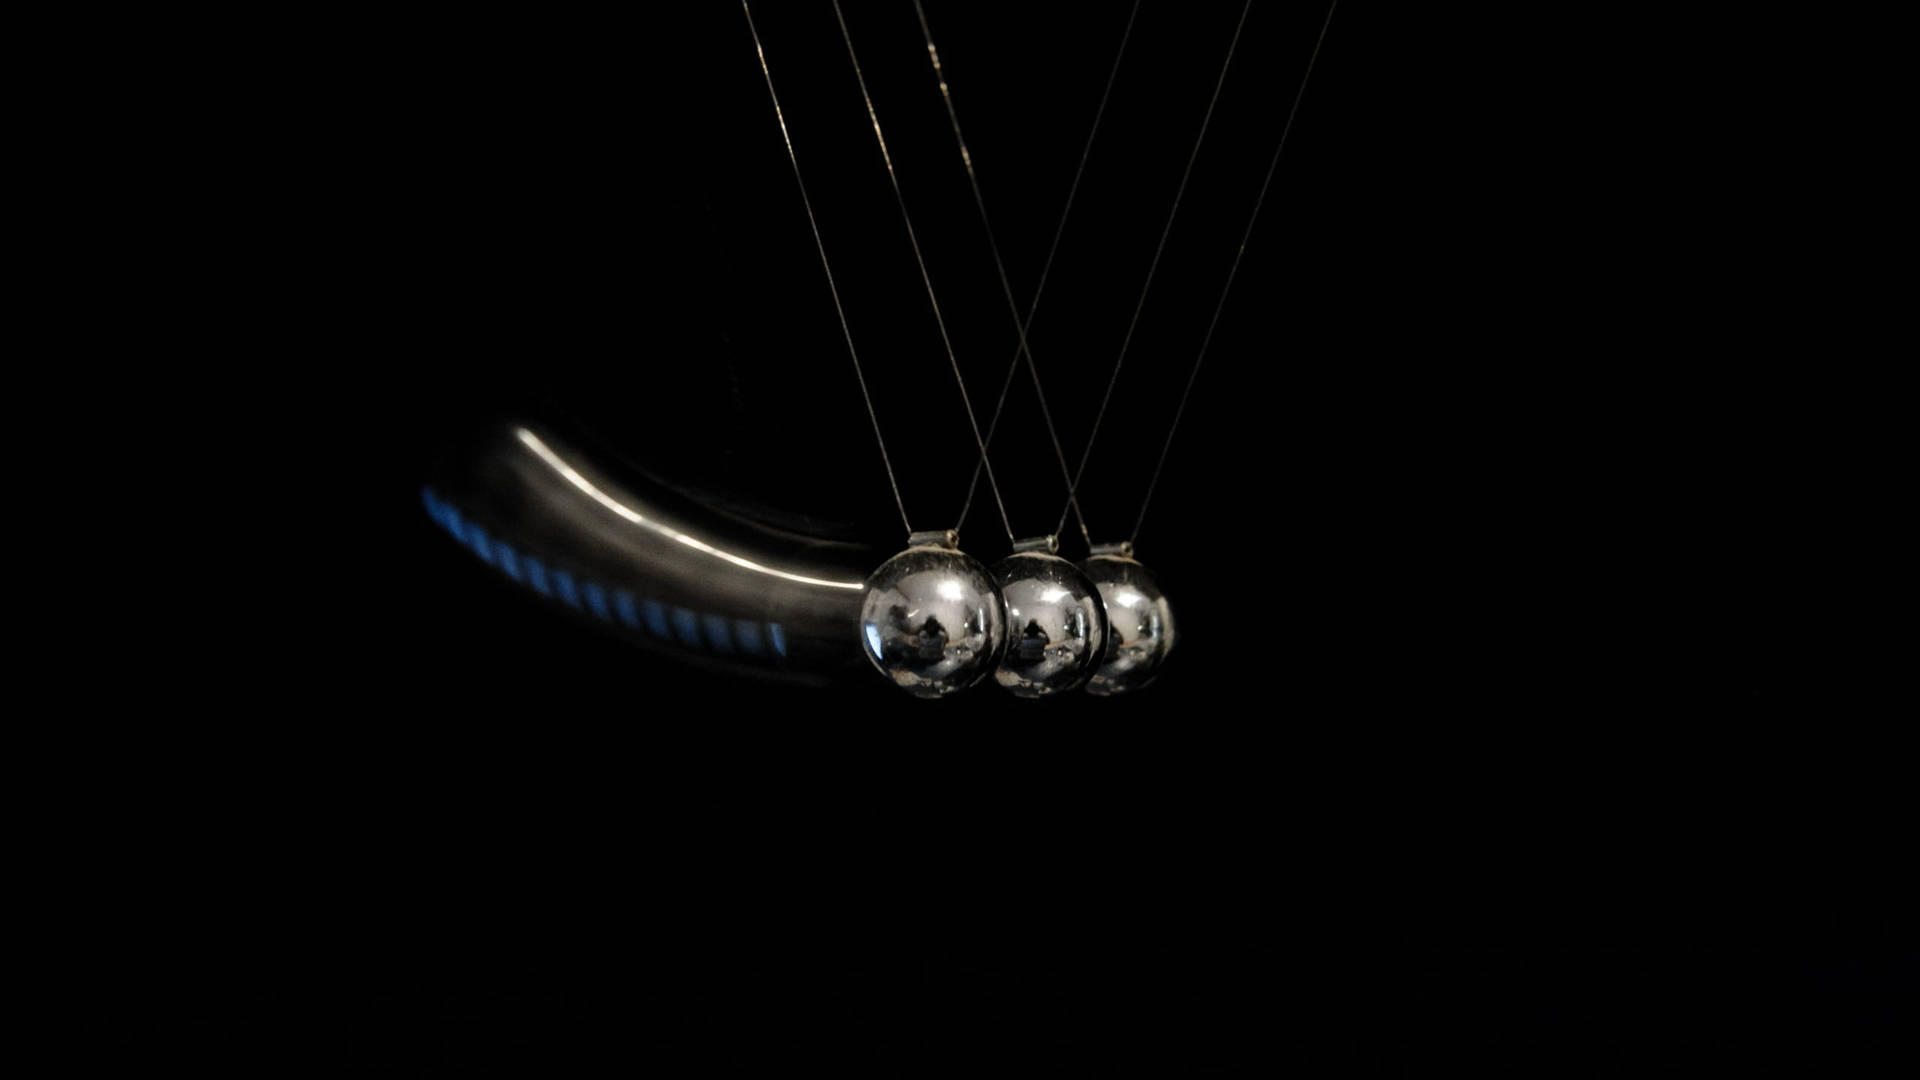 Black Dynamic Pendulum Swing Background